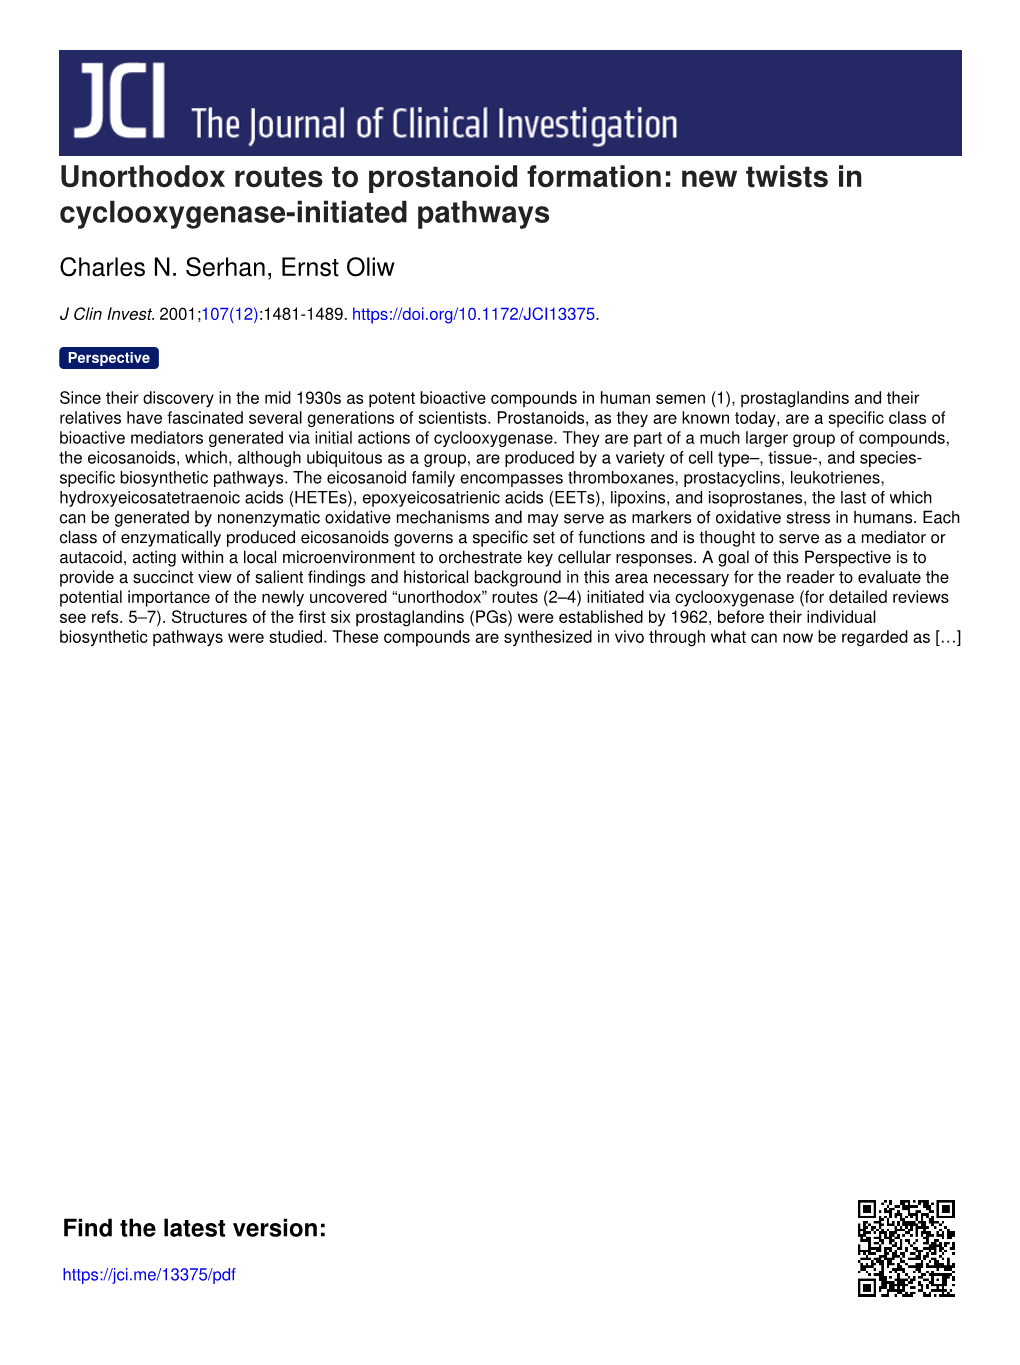 New Twists in Cyclooxygenase-Initiated Pathways